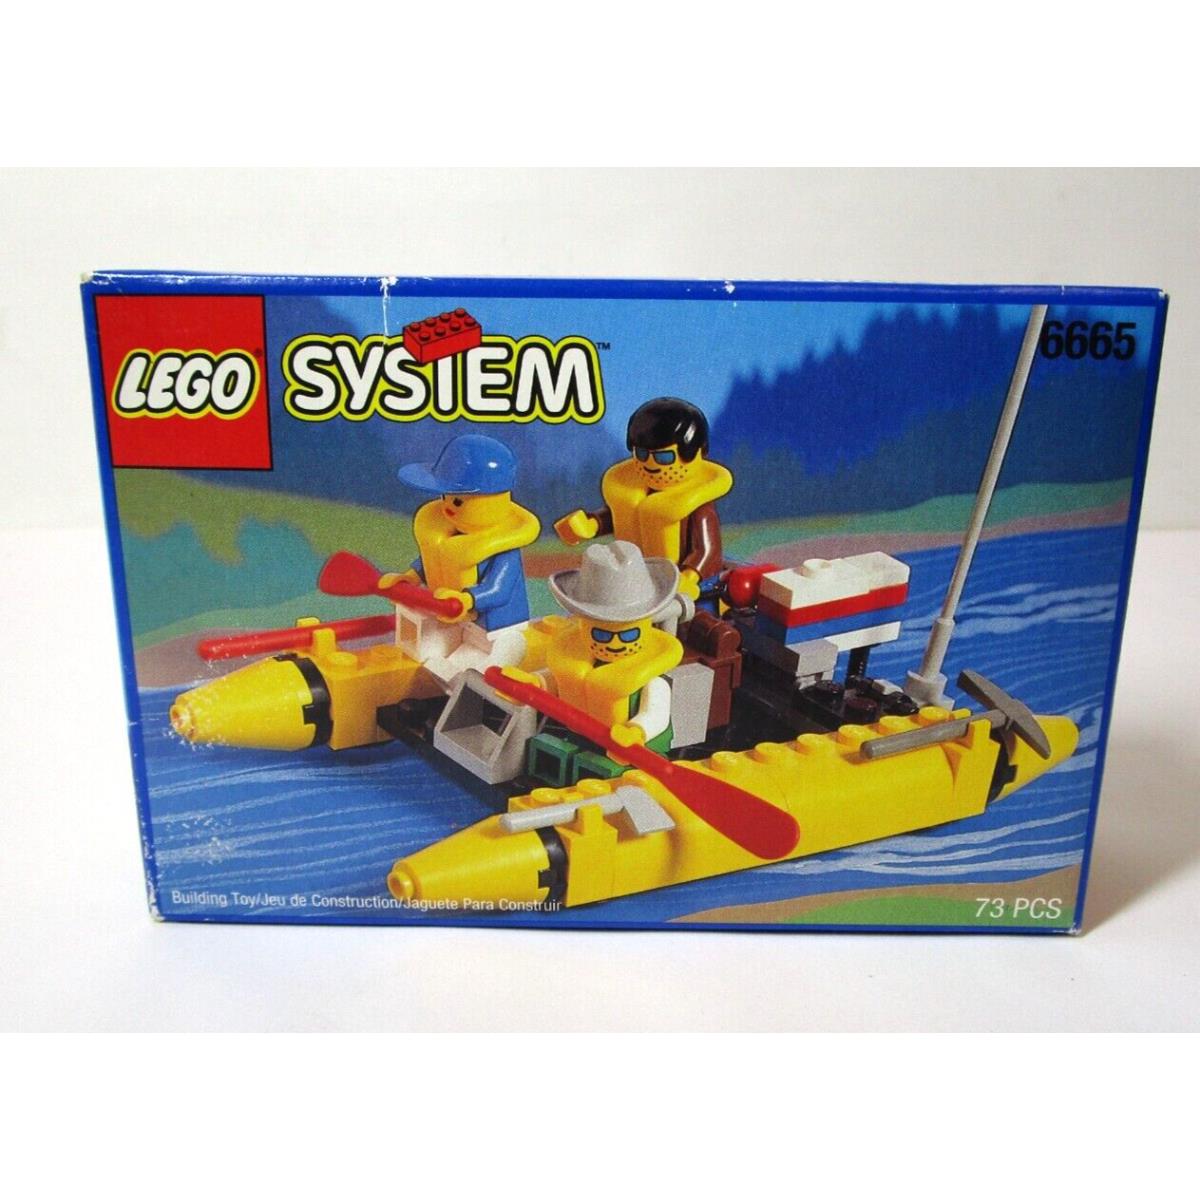 Vintage Lego System River Runners 6665